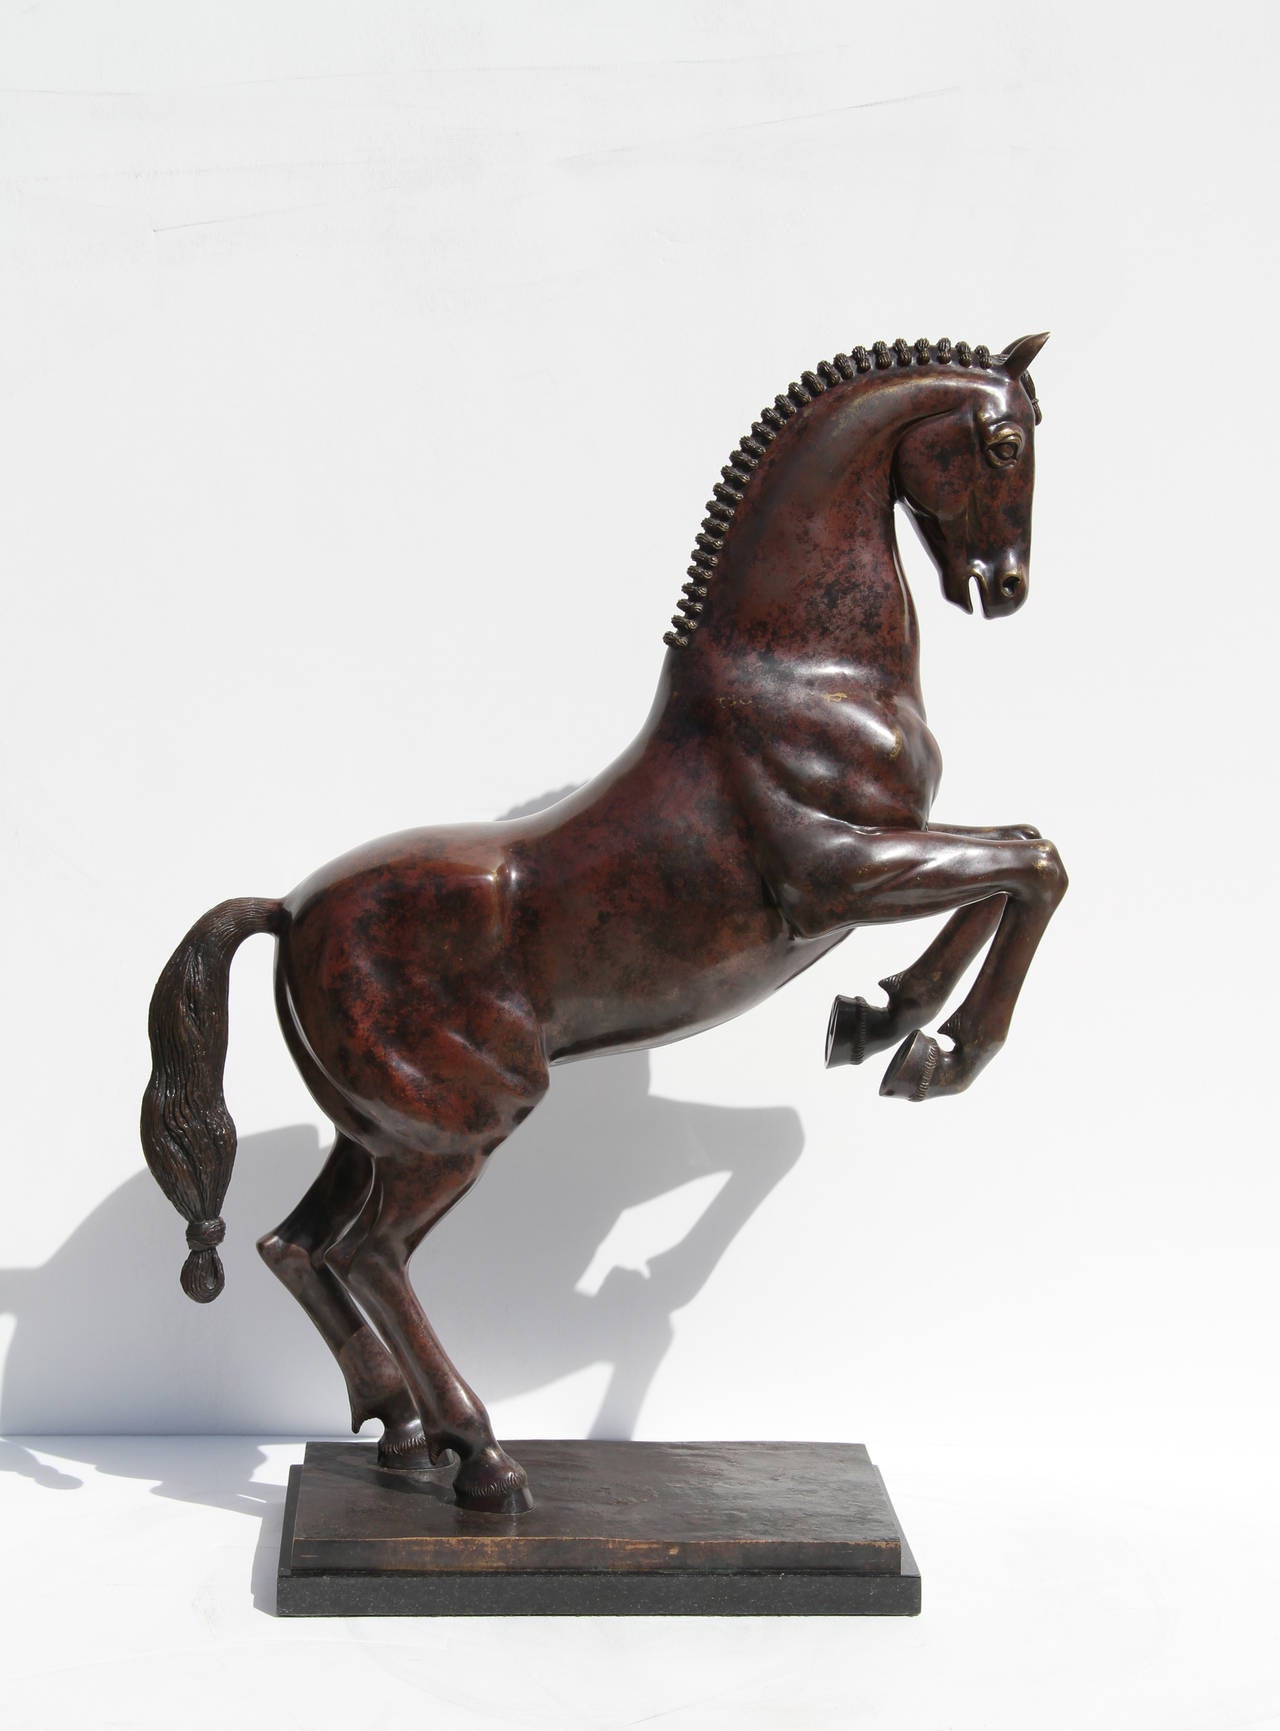 Aga Ousseinov - Horse, Bronze Sculpture For Sale at 1stdibs